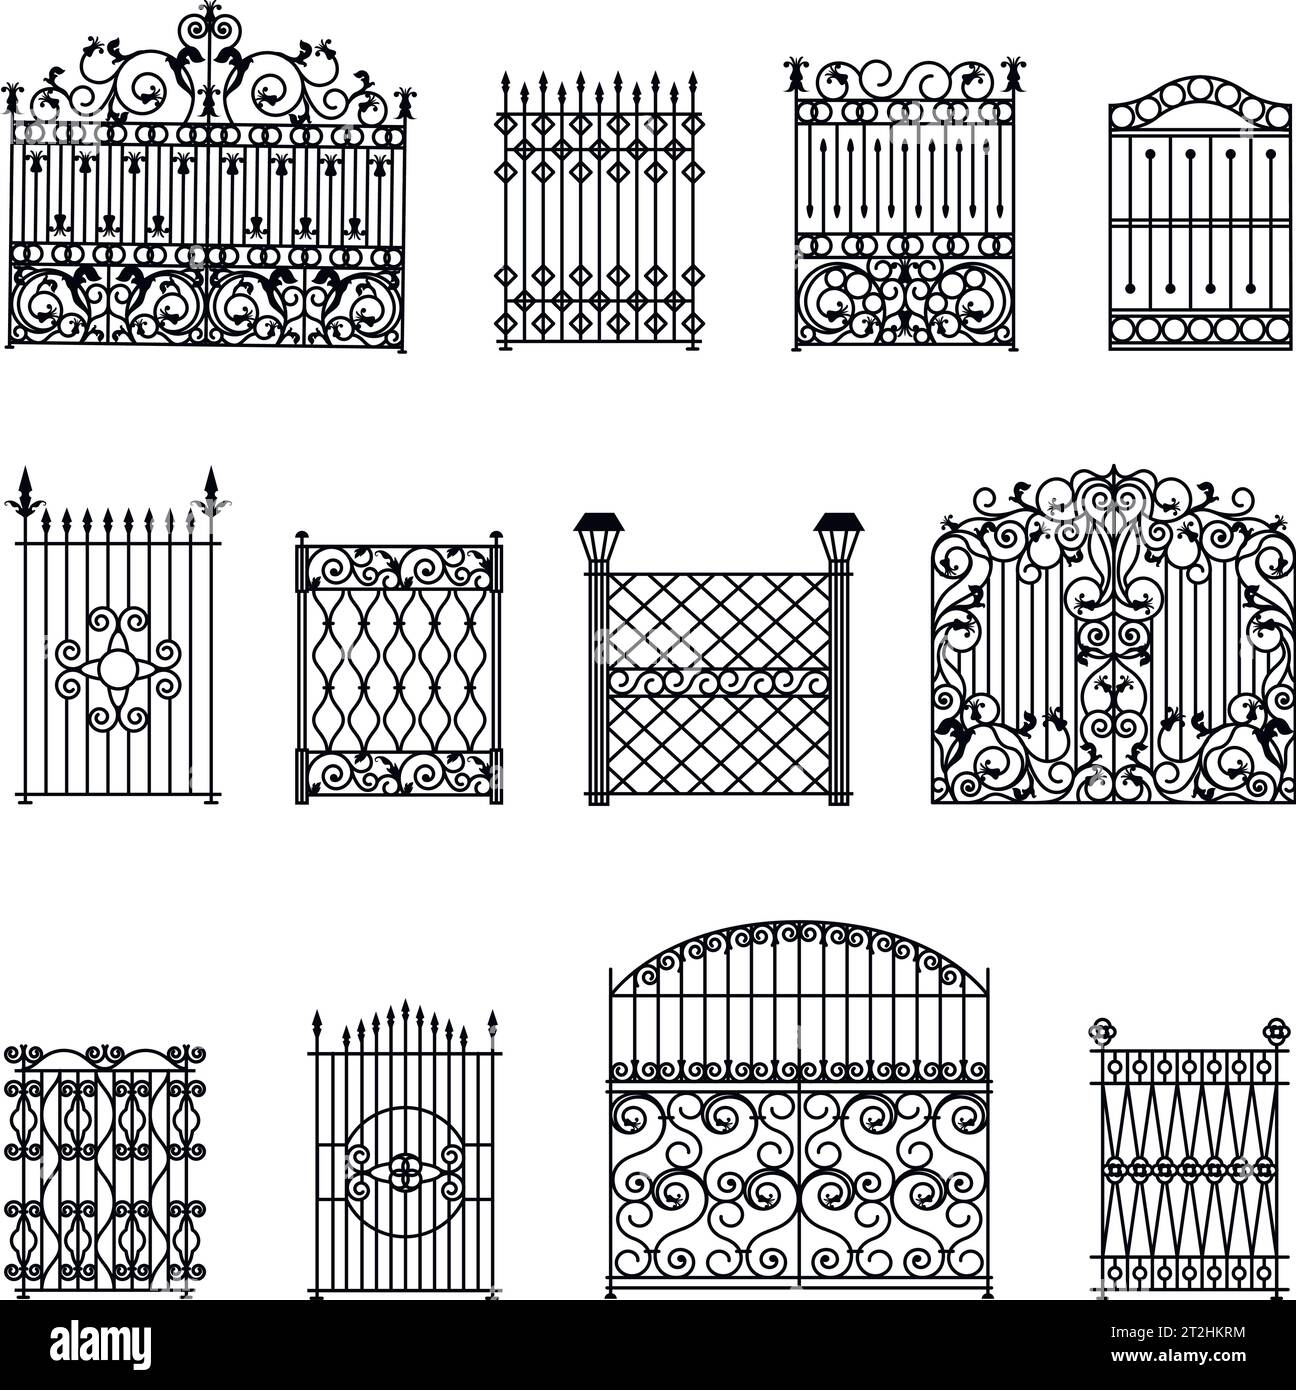 Decorative black white fences set with gates flat isolated vector ...